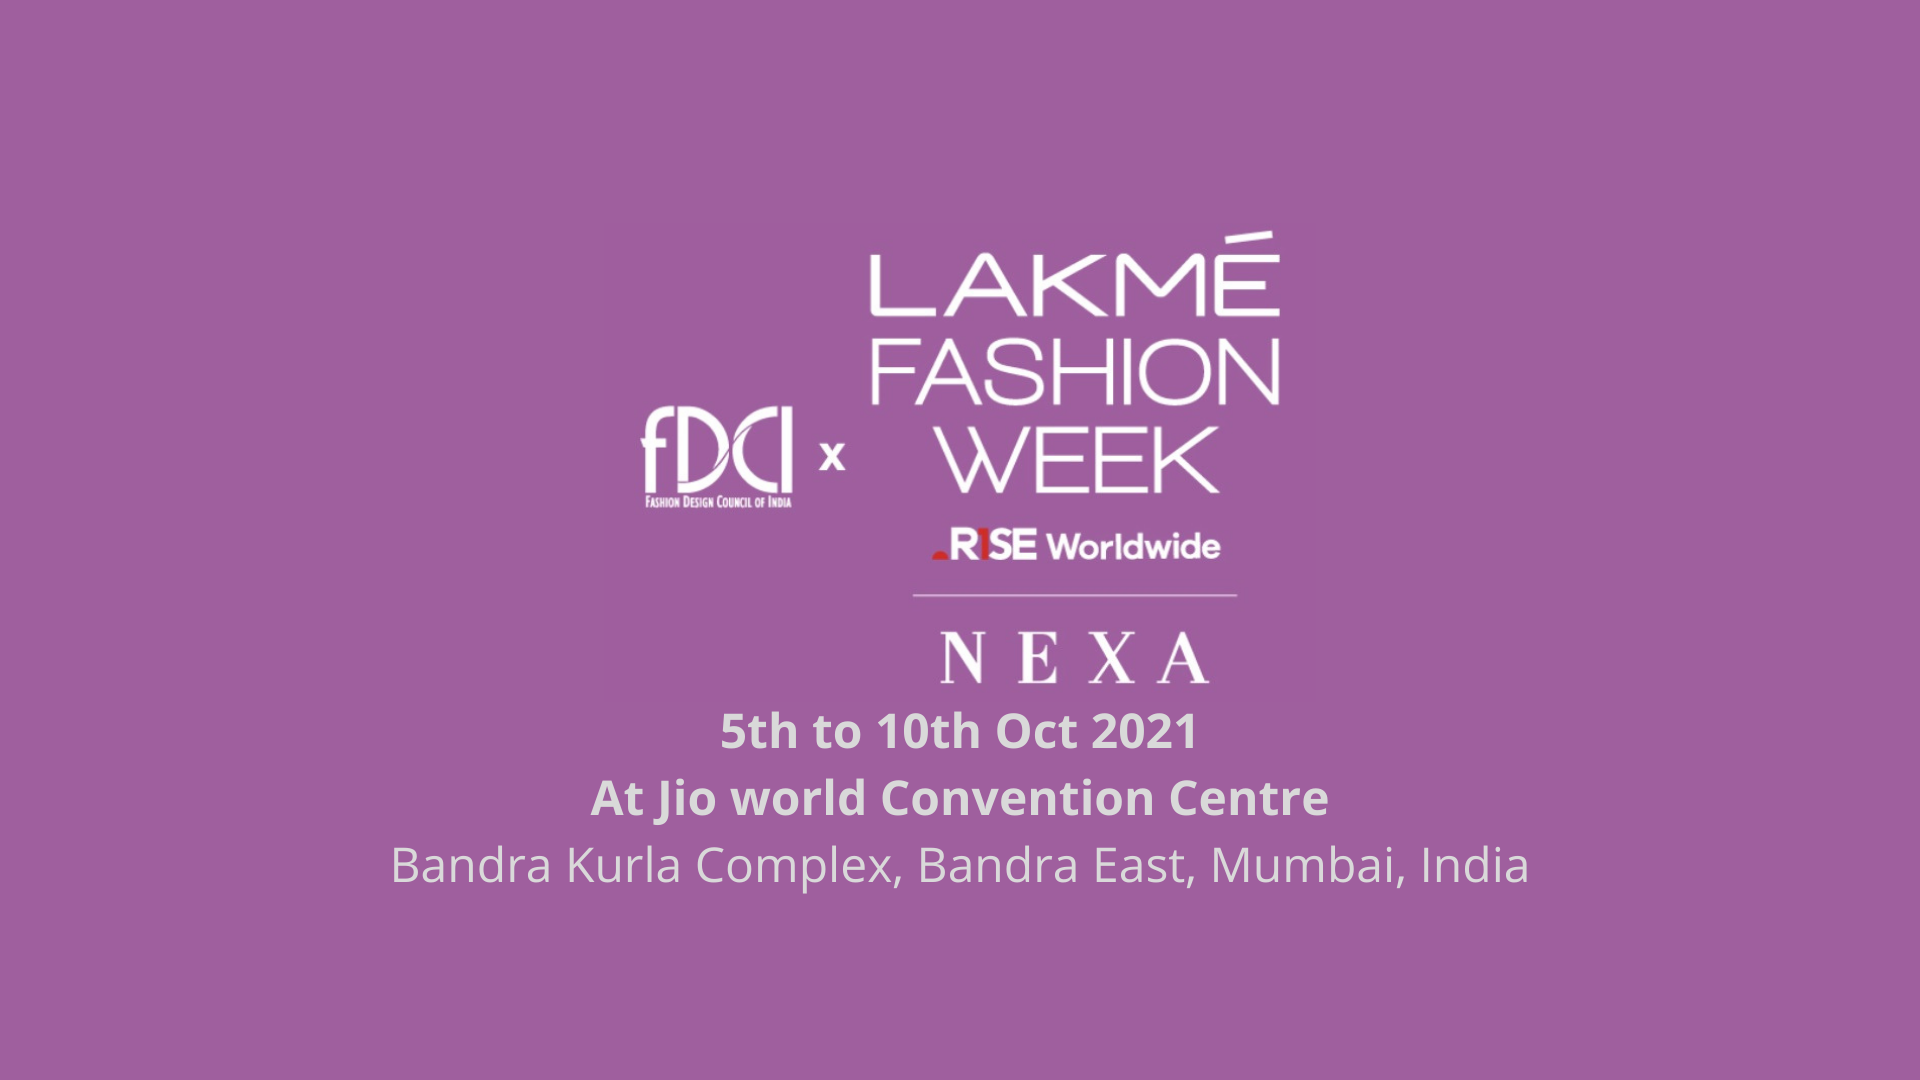 FDCI X Lakme Fashion Week TV Show: Watch All Seasons, Full Episodes &  Videos Online In HD Quality On JioCinema